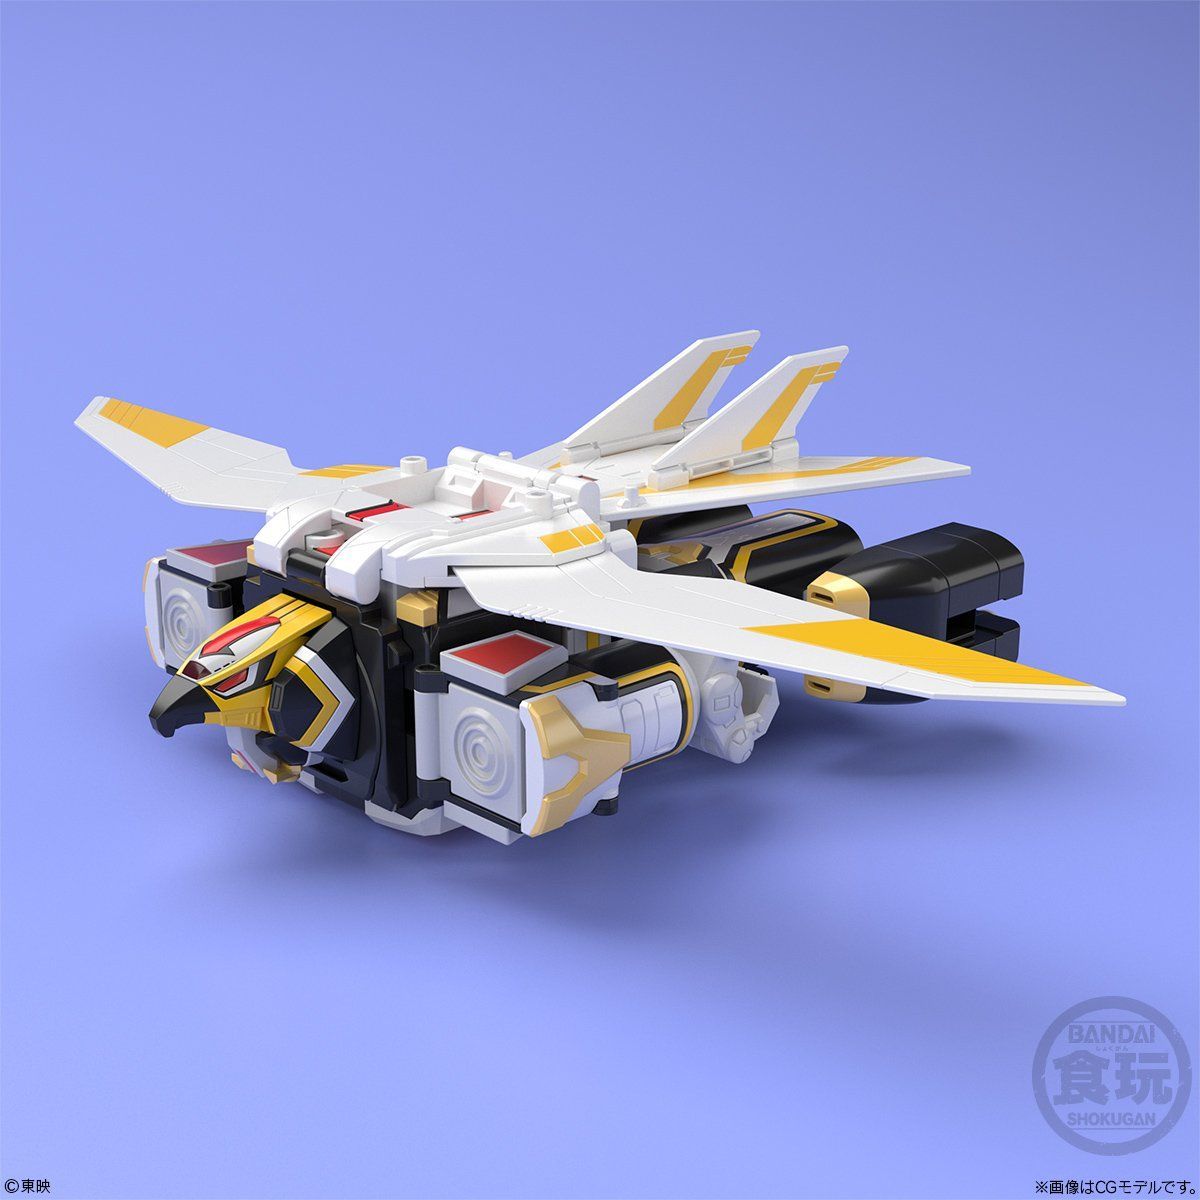 Super Minipla Jet Garuda (Reissue)